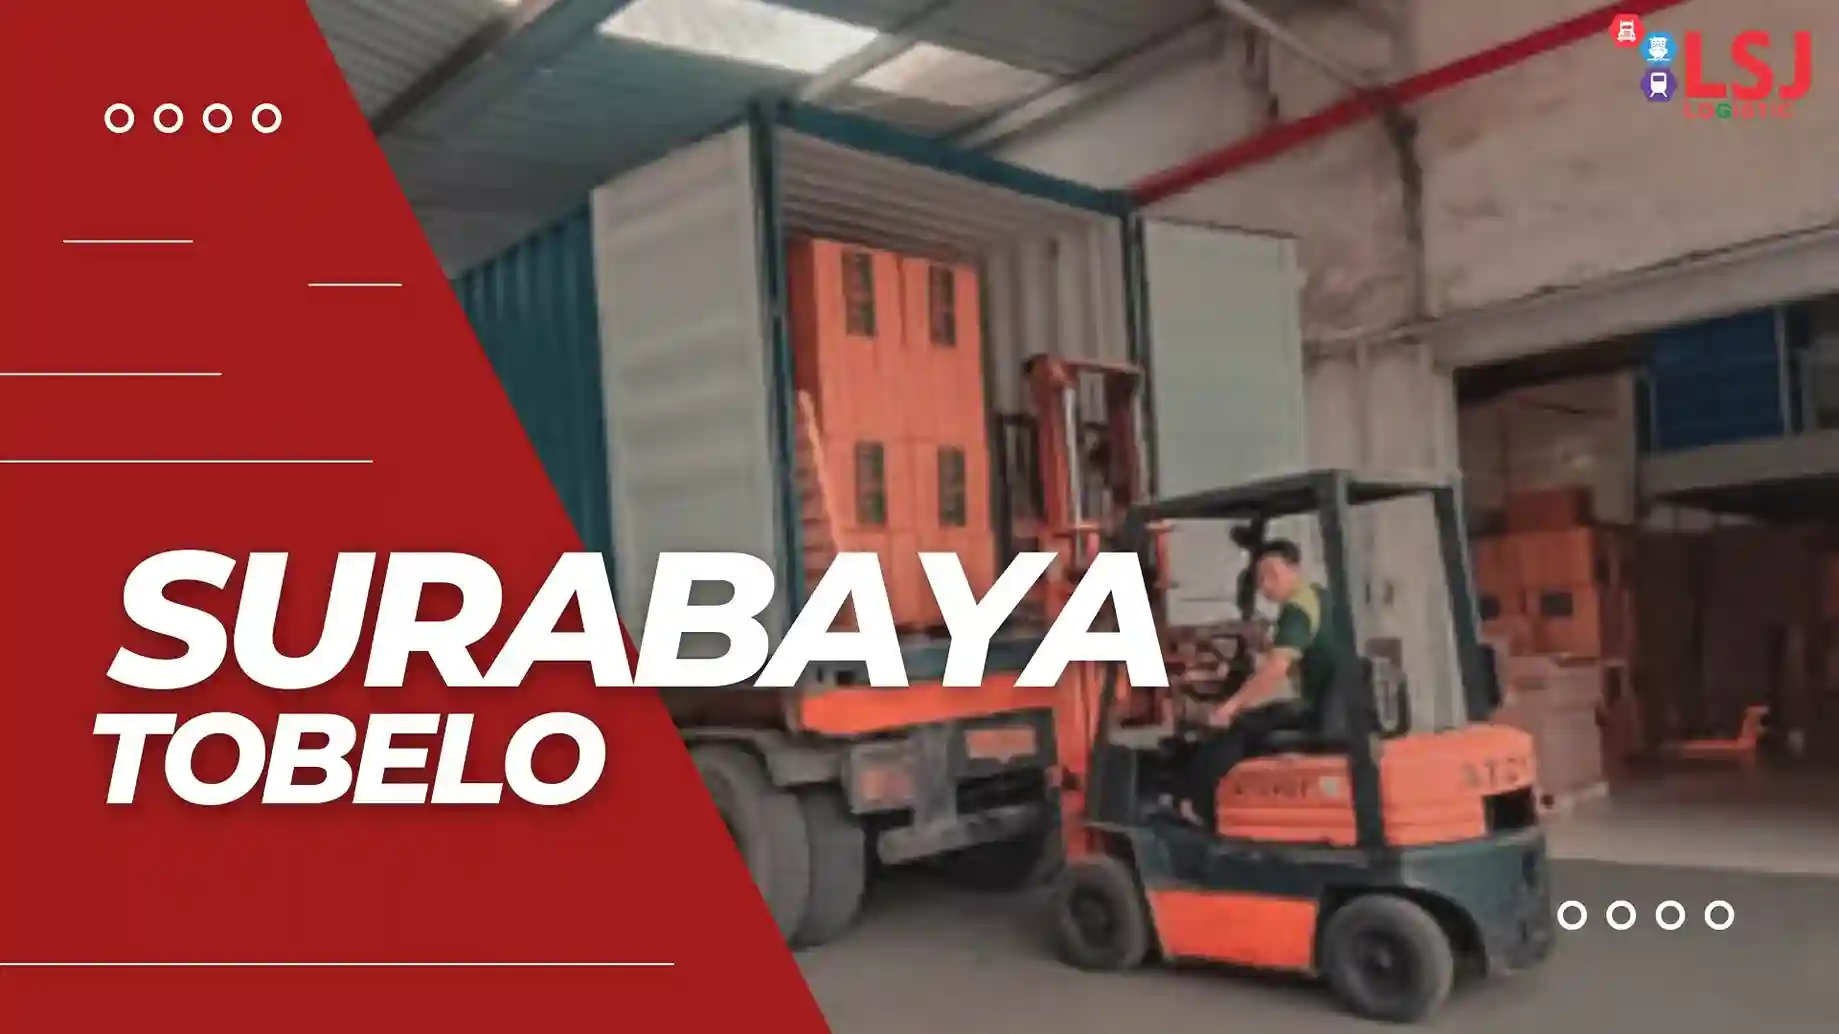 Ekspedisi Container Surabaya Tobelo